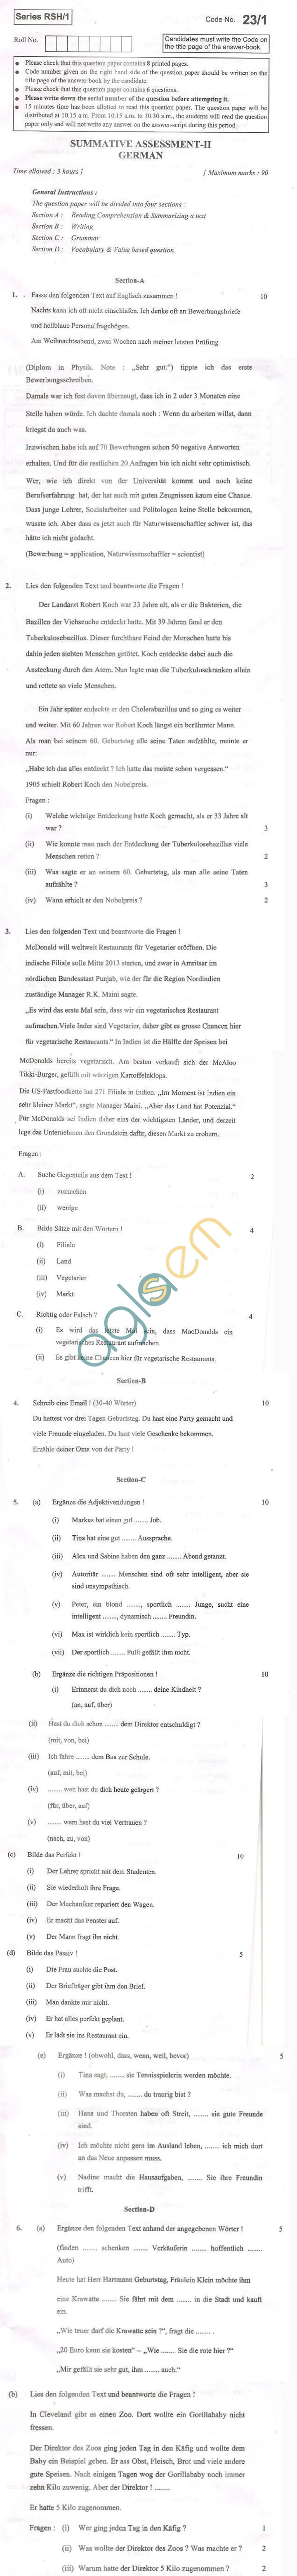 CBSE Board Exam 2013 Class X Question Paper - German 